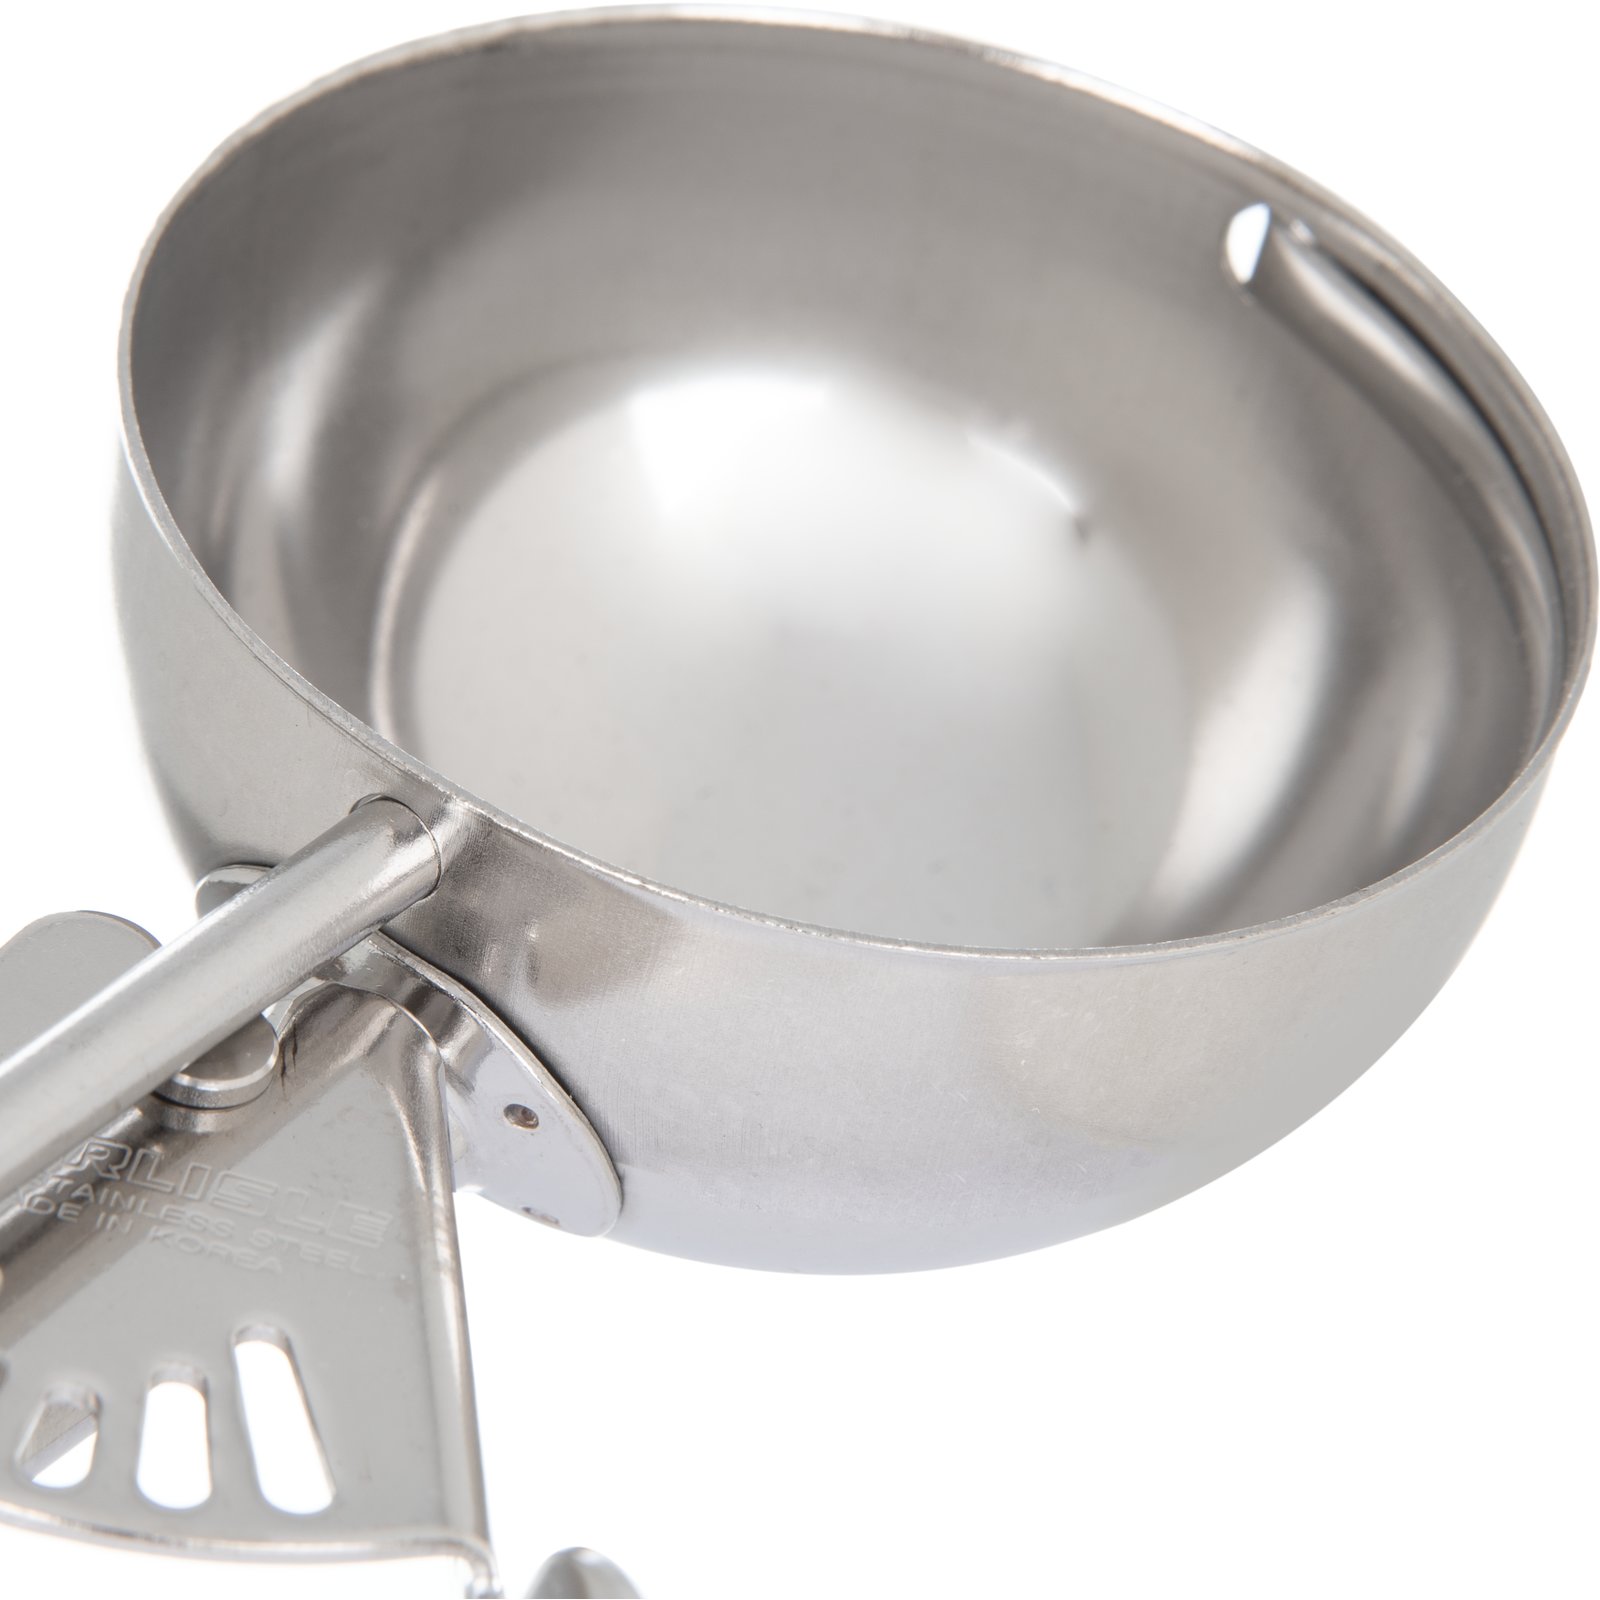 Portion Scoop - #8 (3.7 oz) - Disher, Cookie Scoop, Food Scoop - Portion  Control - 18/8 Stainless Steel, Grey Handle